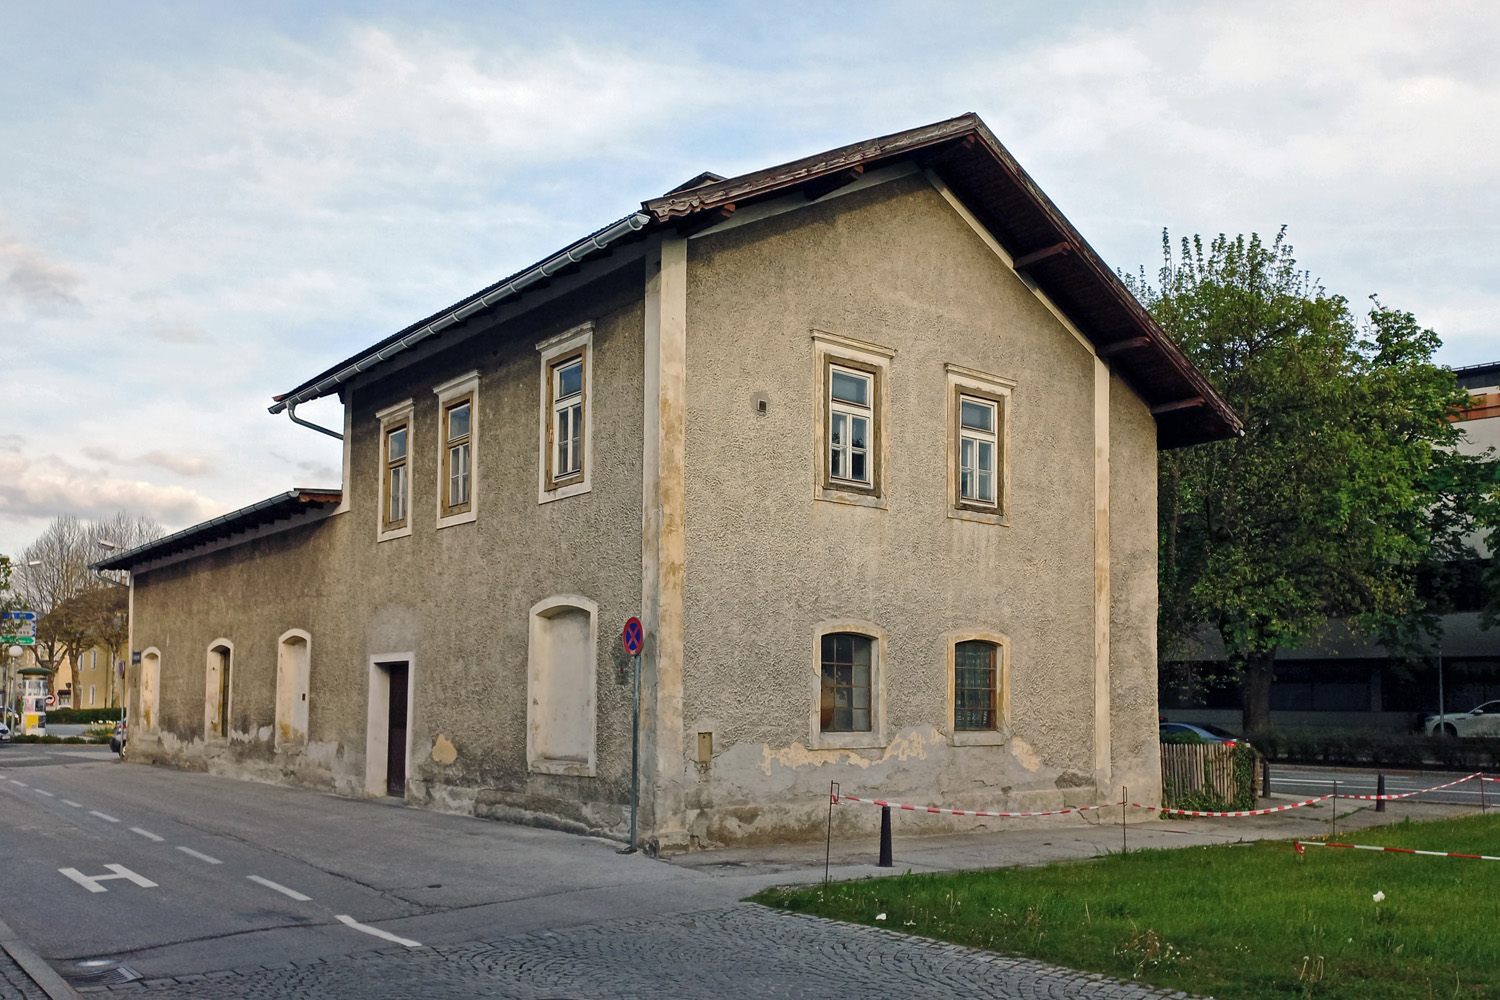 Hall in Tirol, LBIHiT Remise Localbahn